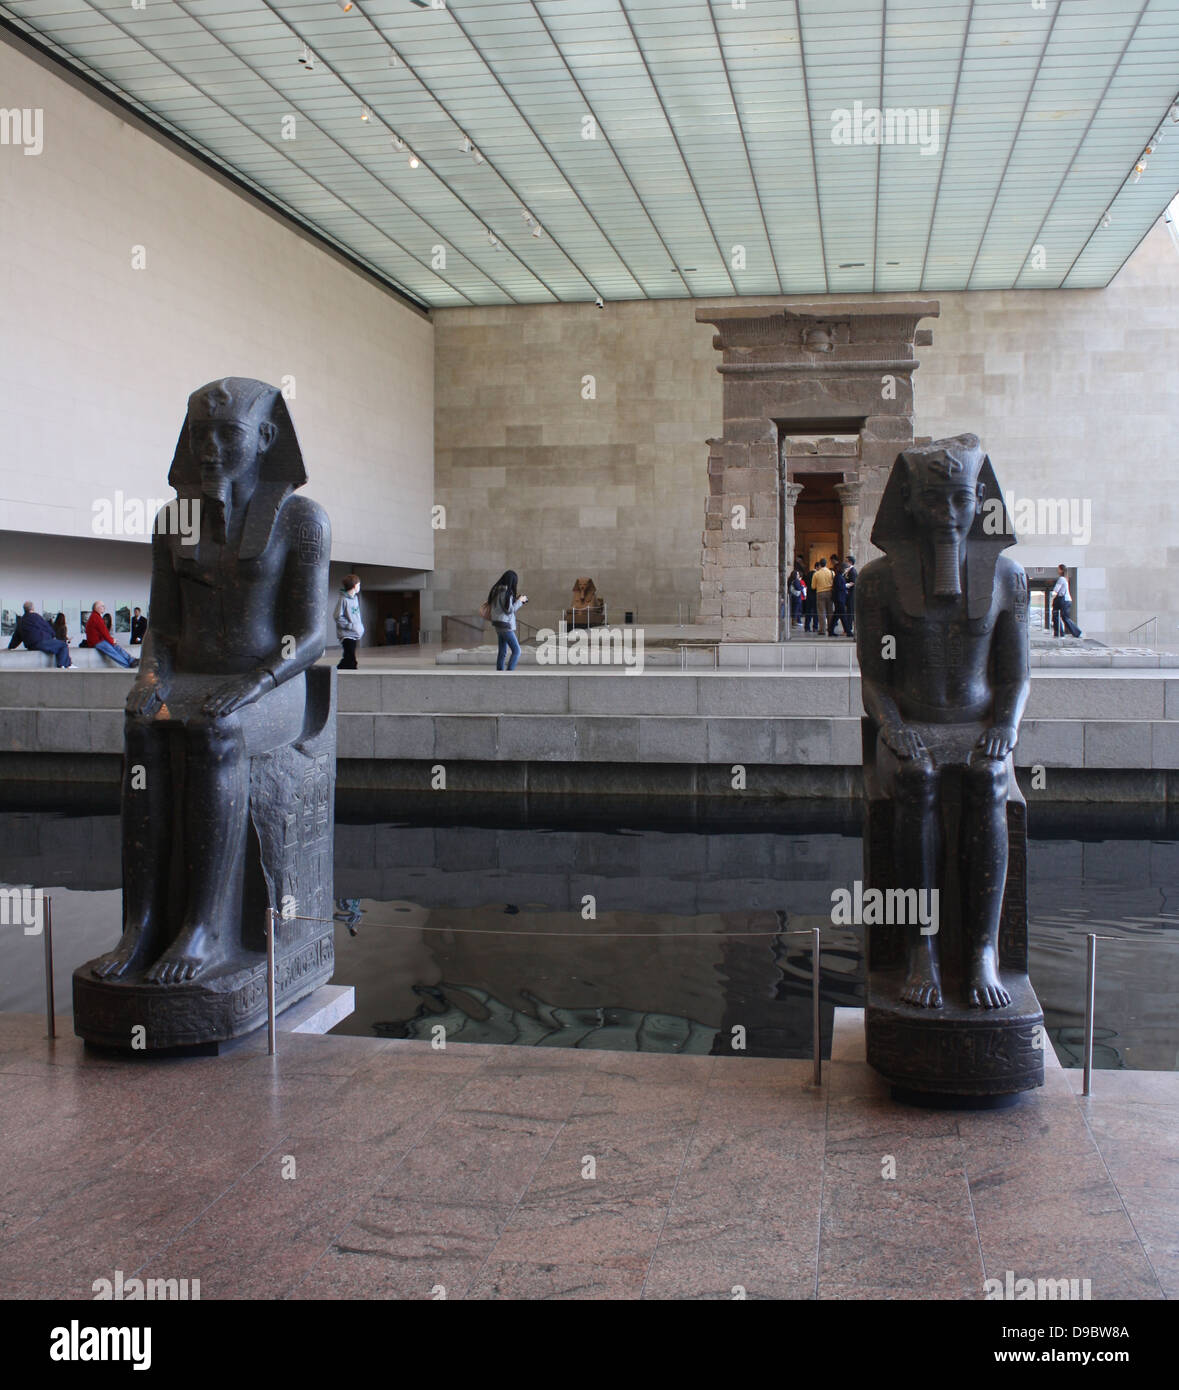 Architecture of the Metropolitan Museum of Art.  Egyptian Art enclosure. Temple of Dendur. Stock Photo